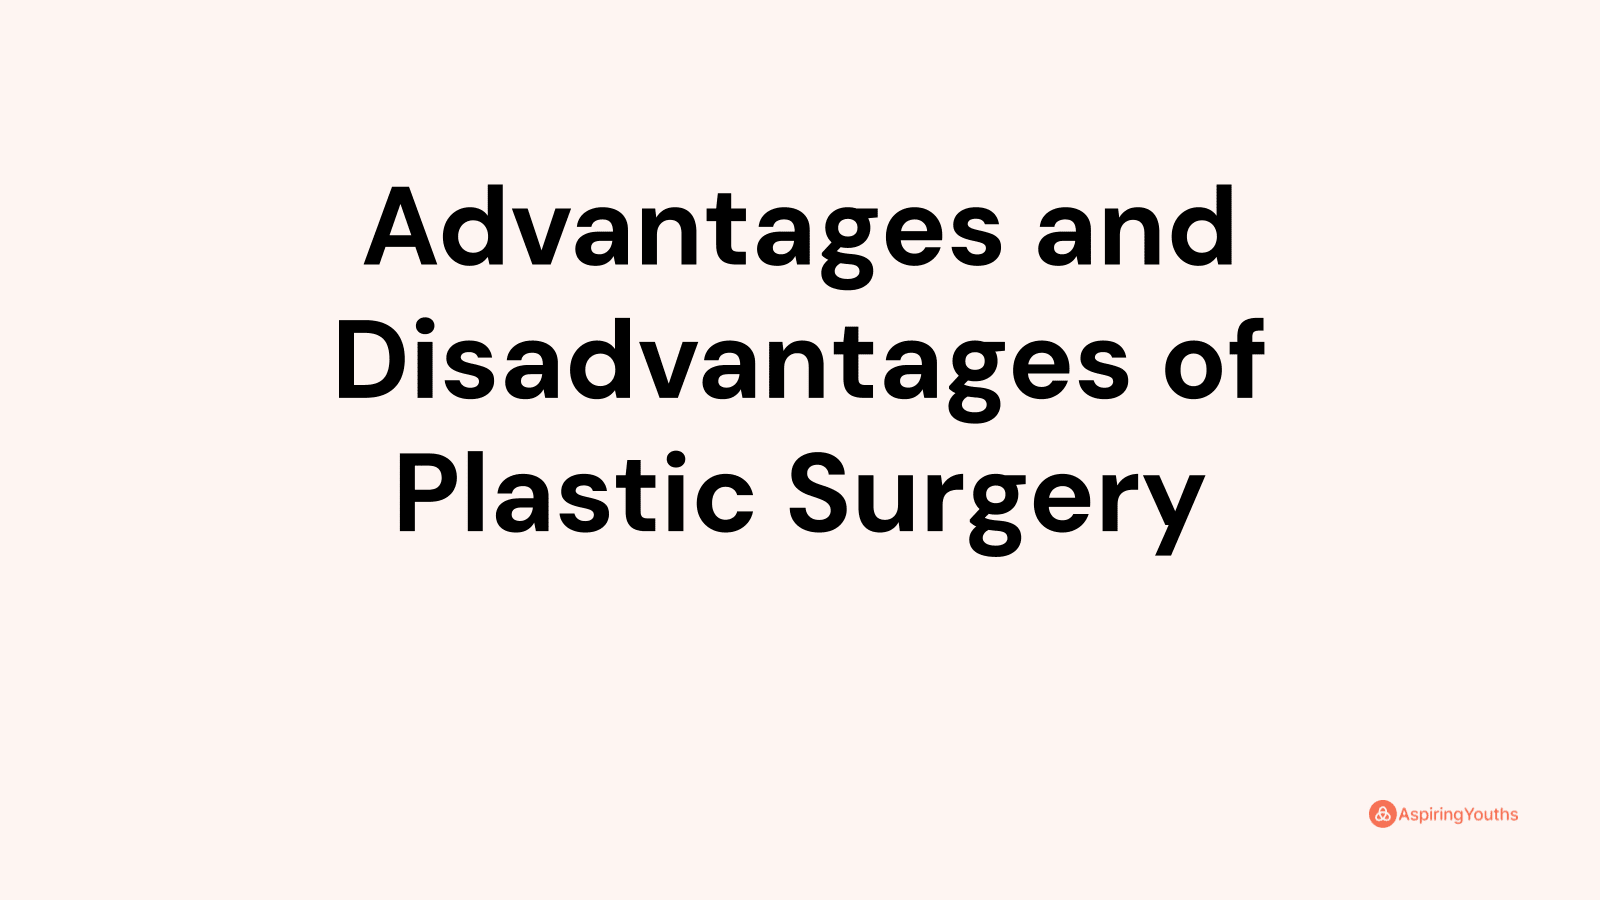 Advantages and disadvantages of Plastic Surgery